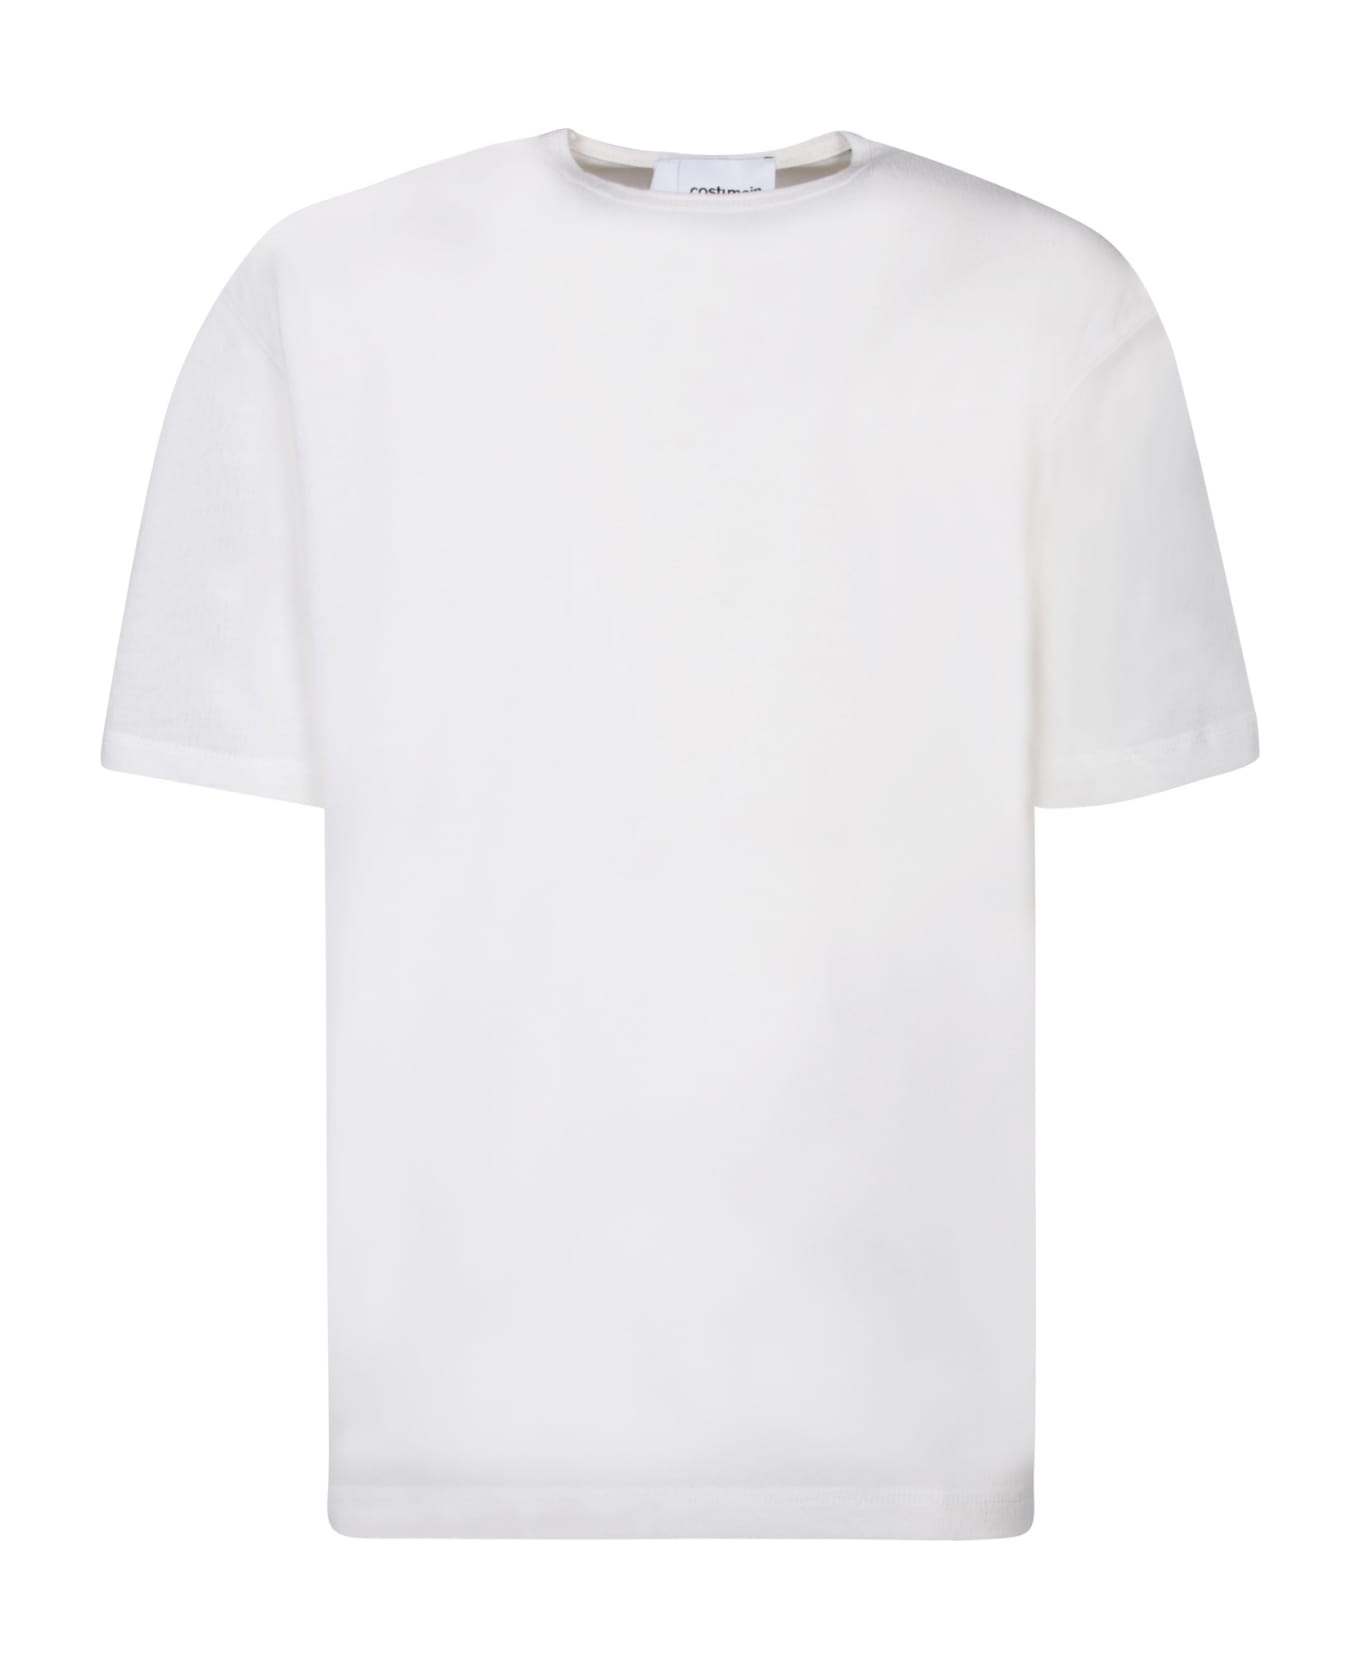 costumein Liam White T-shirt By Costumein - White シャツ